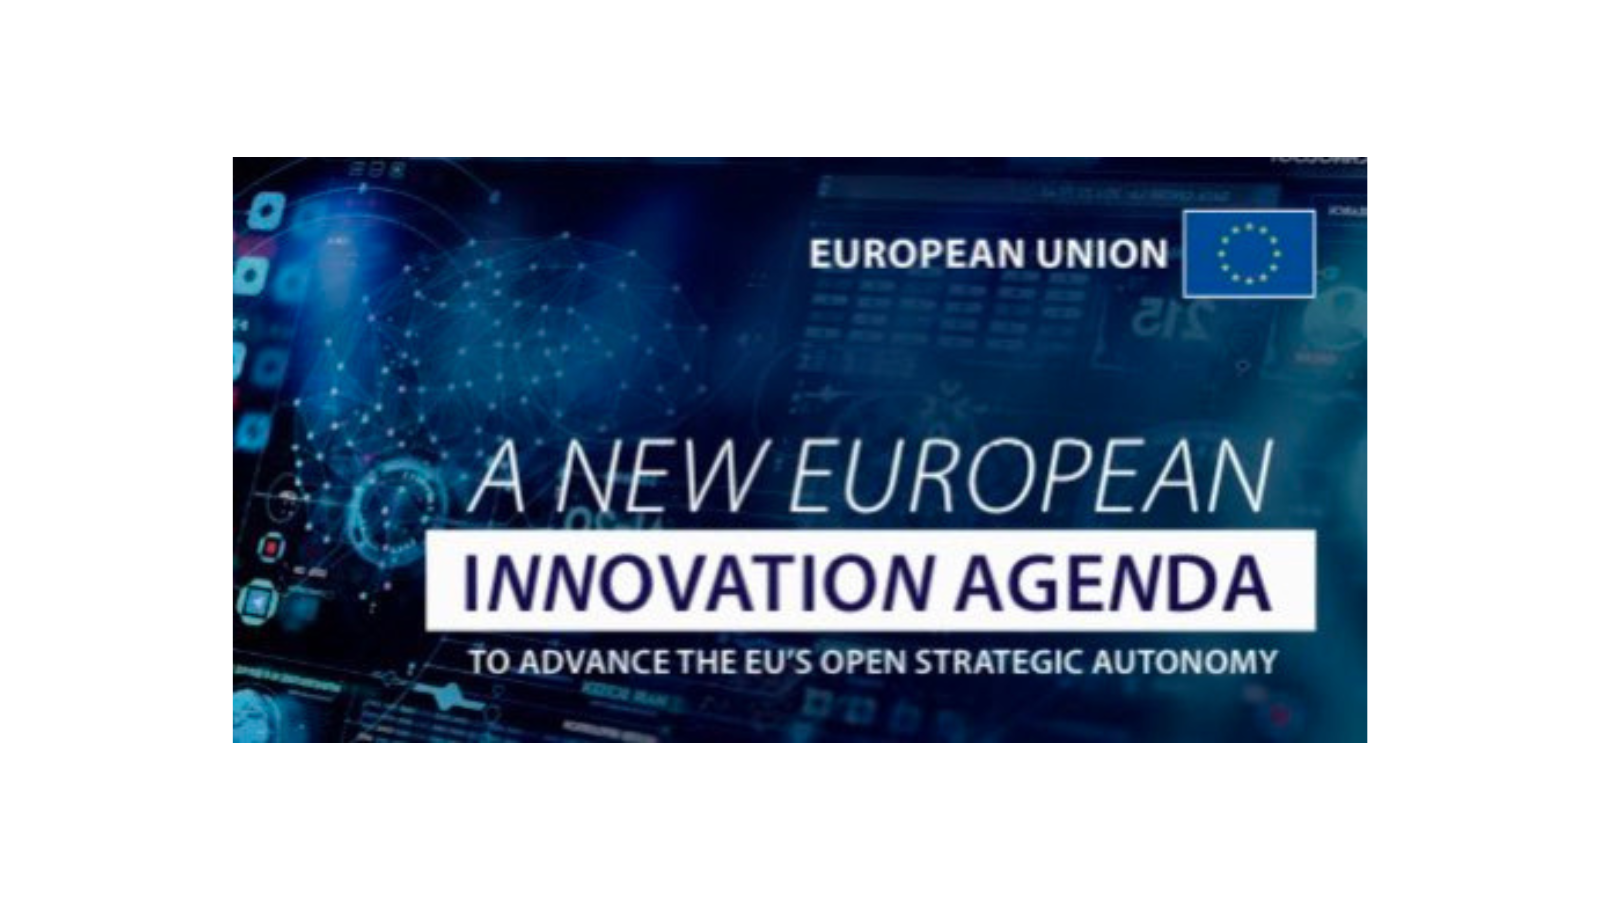 The new European Innovation Agenda unveiled